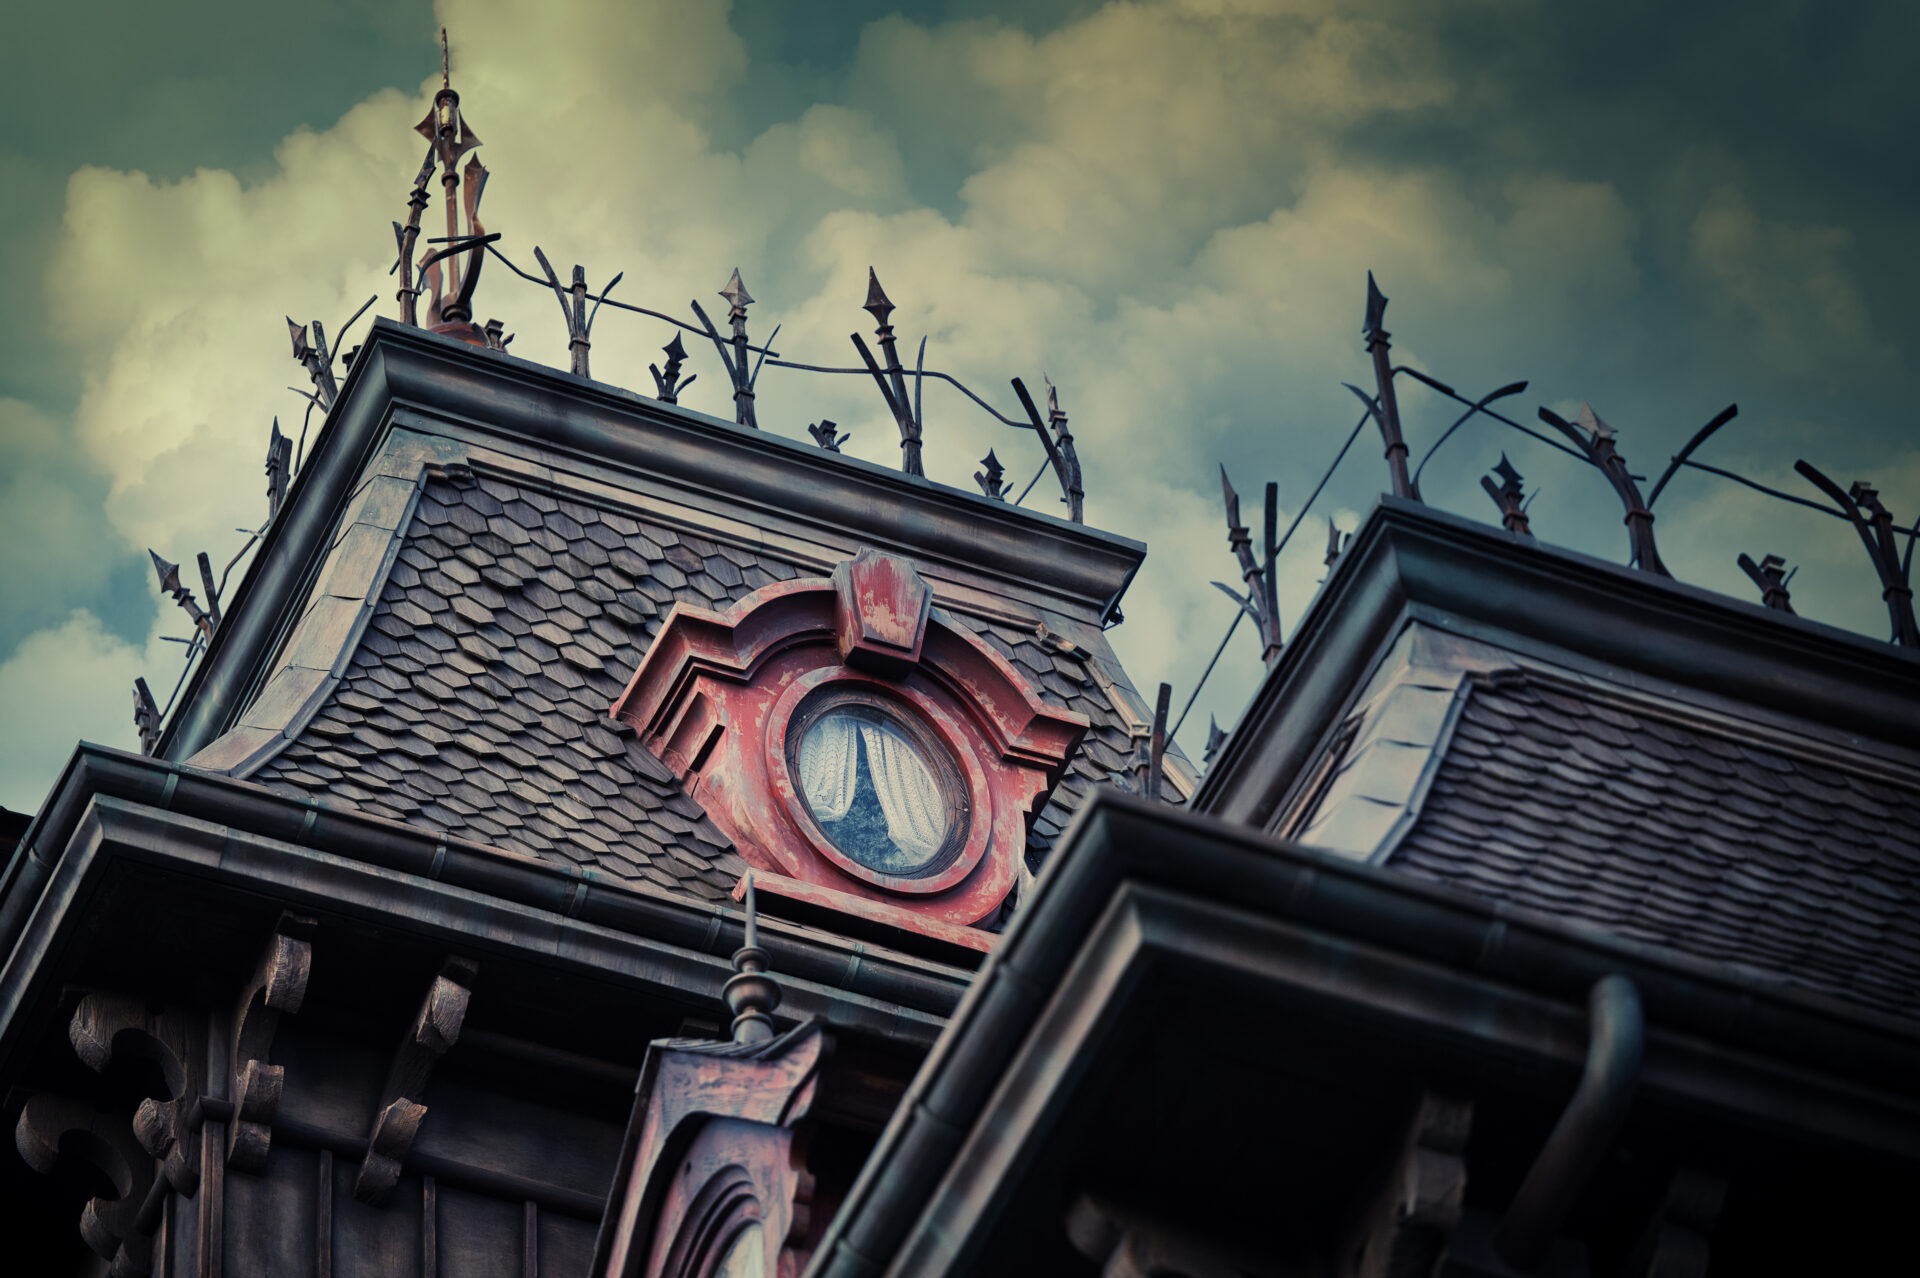 Disneyland Paris Phantom Manor Frontierland Haunted Mansion Haunted House Window Top Floor